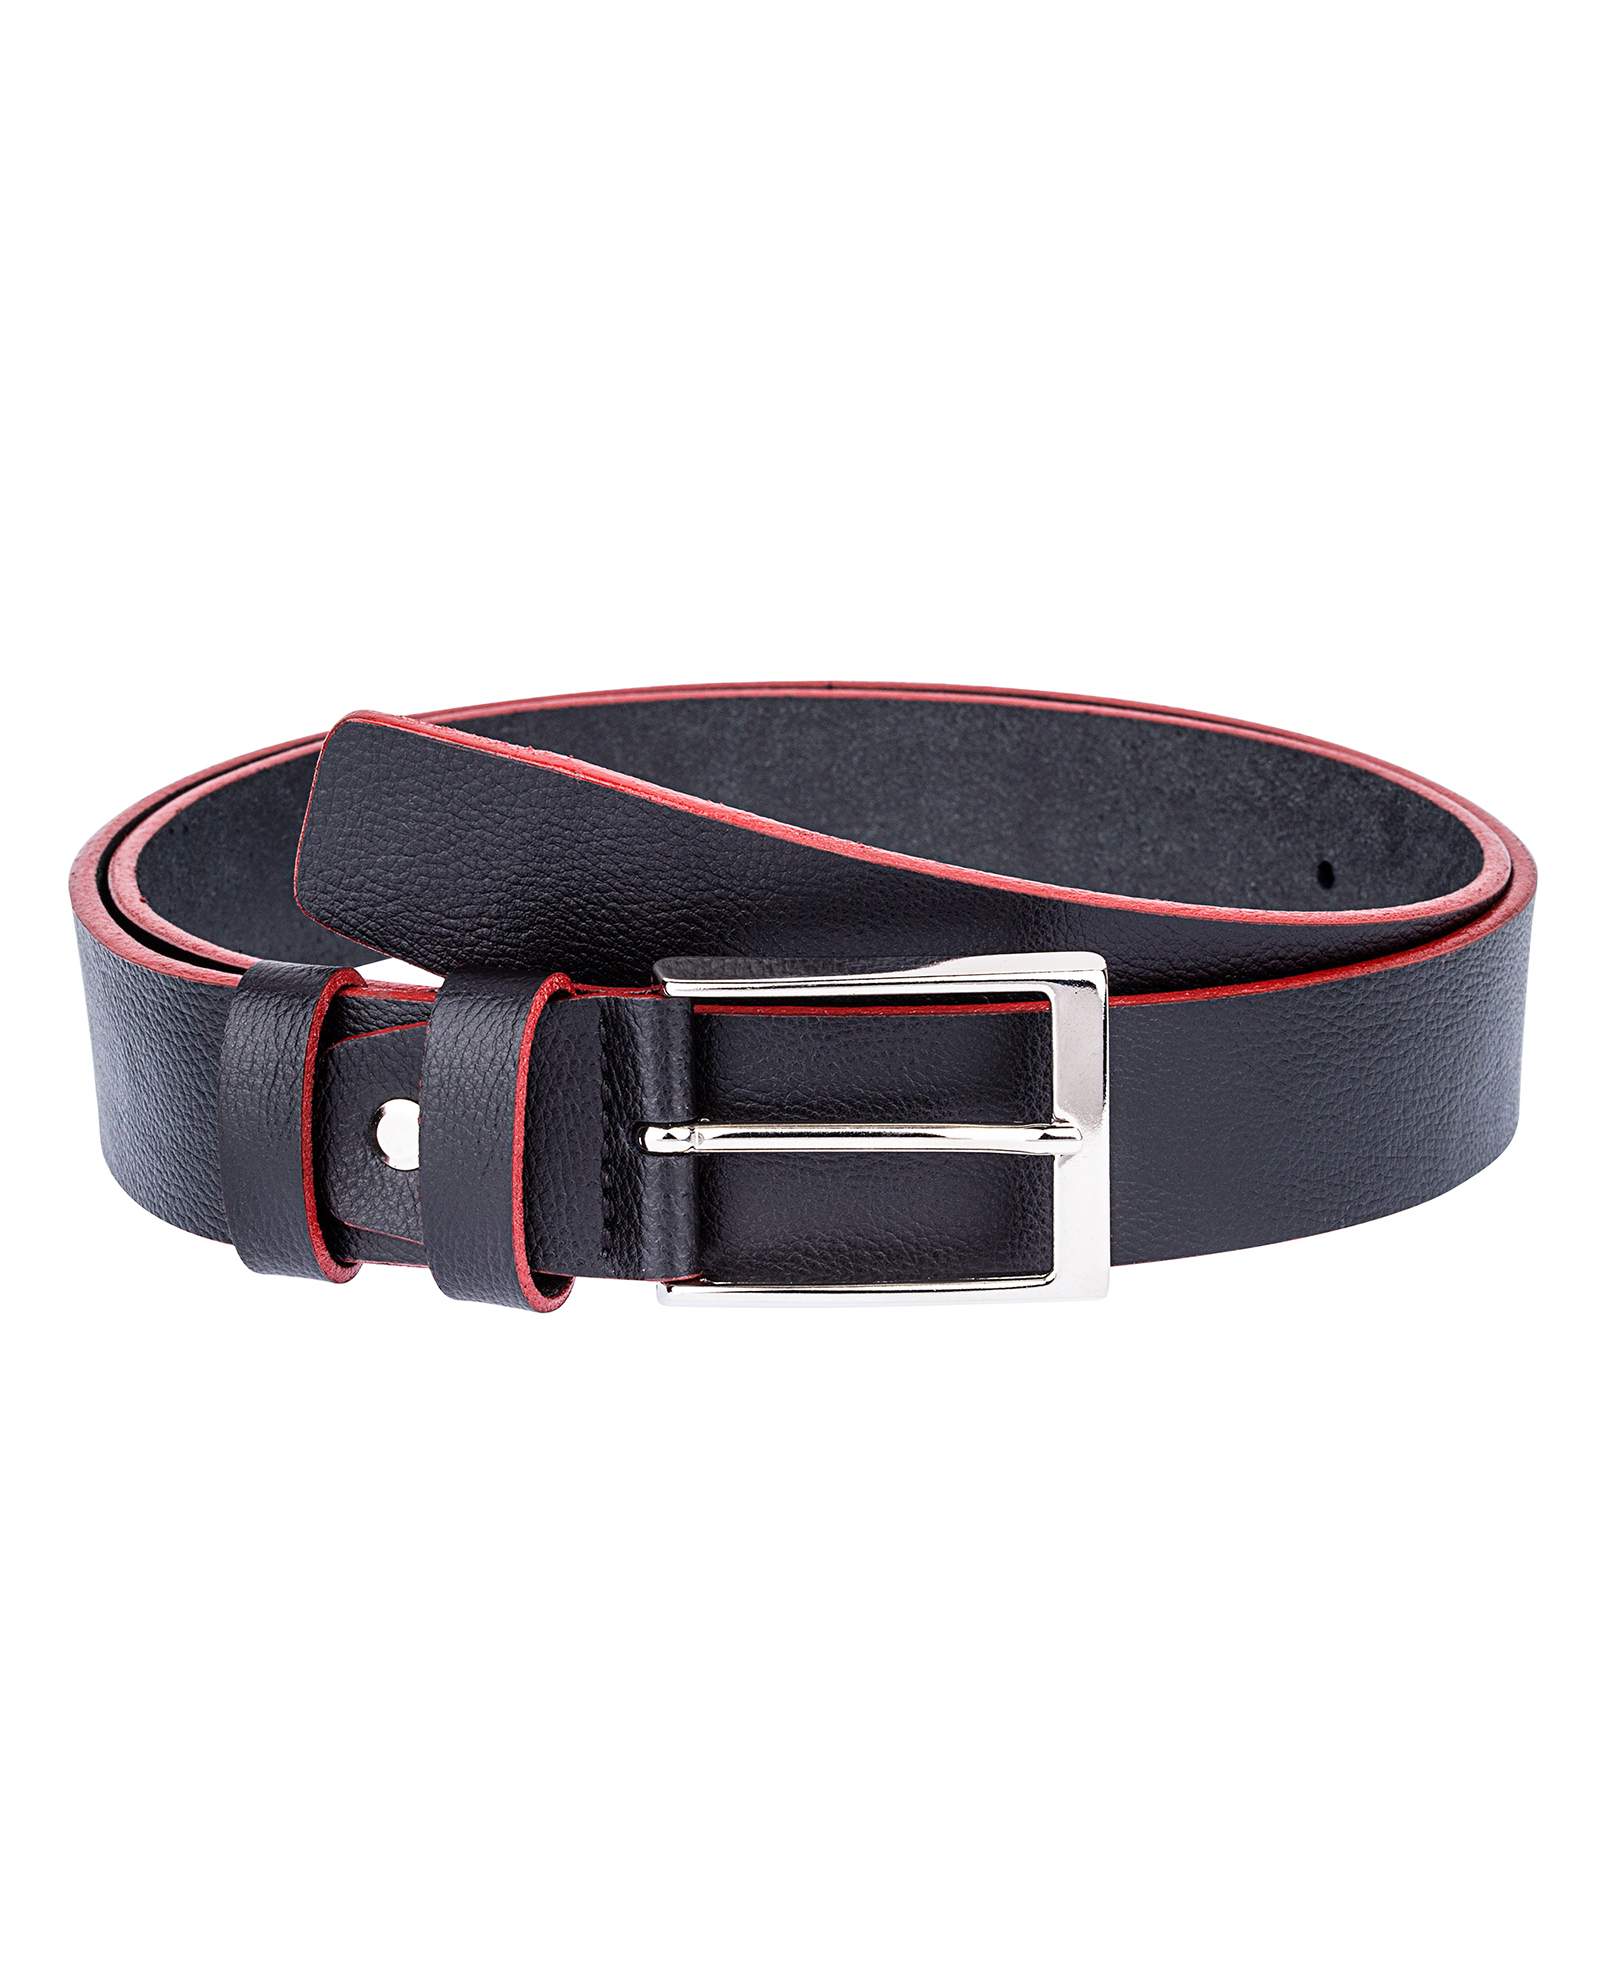 Buy Men's Casual Leather Belt | LeatherBeltsOnline.com | Free Shipping